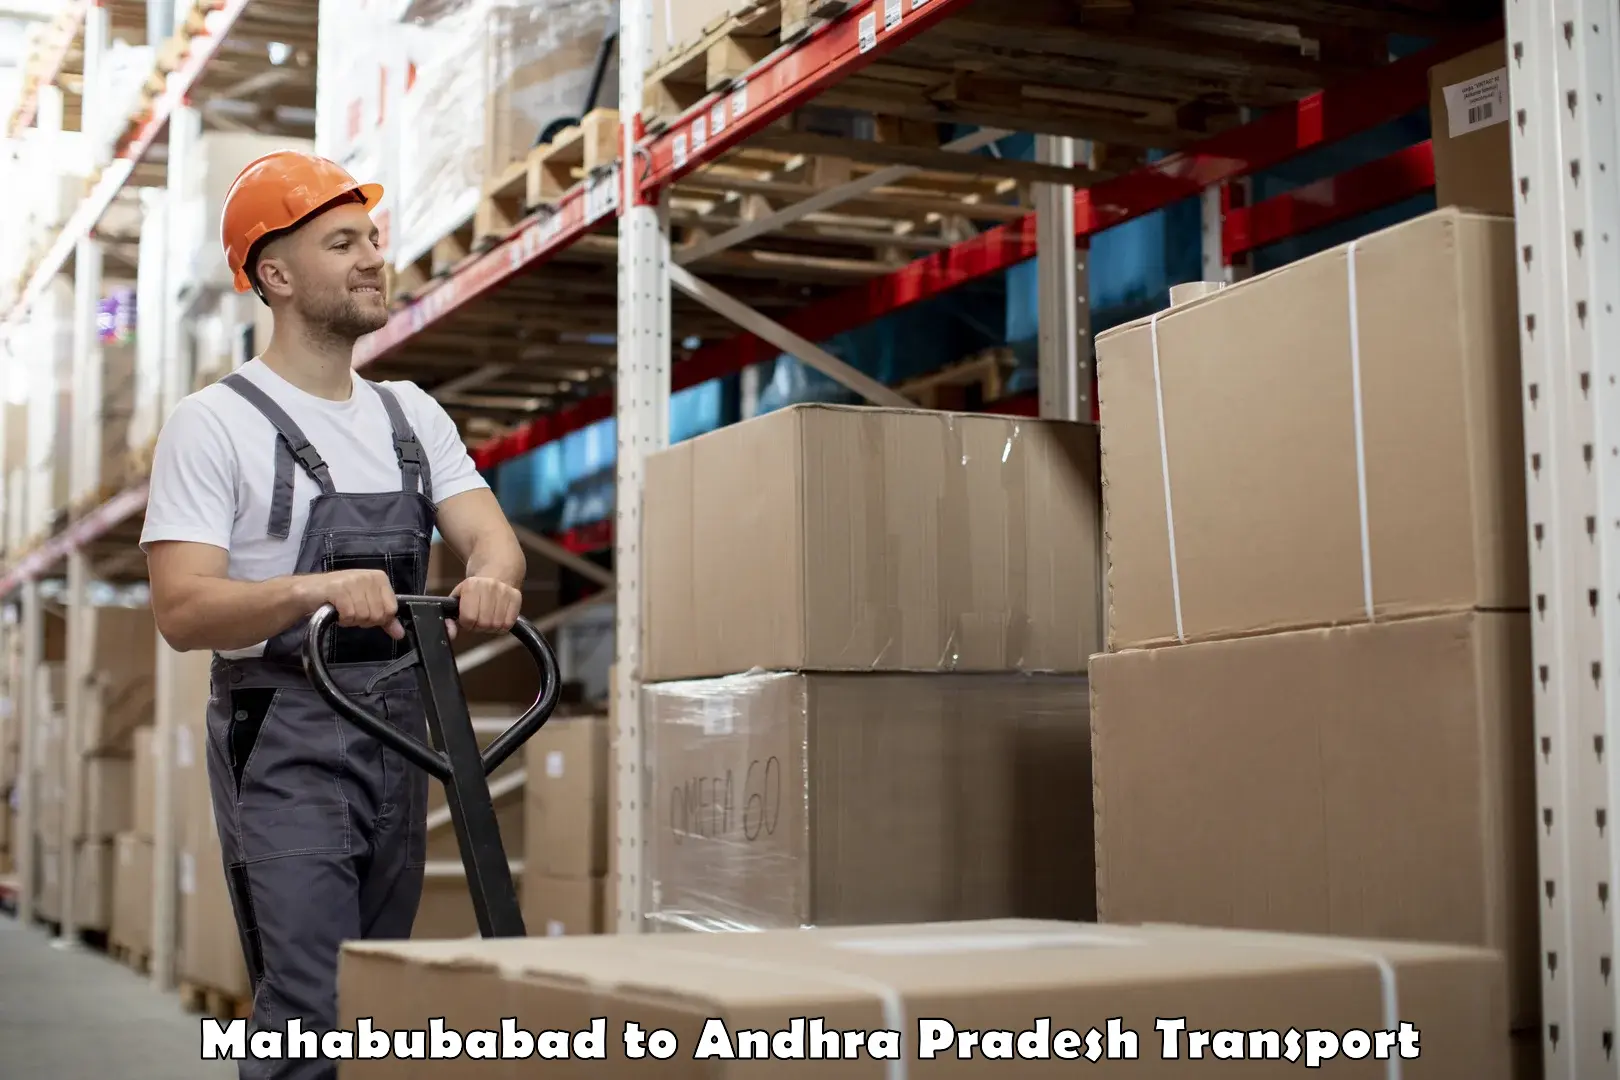 Truck transport companies in India Mahabubabad to Vempalli